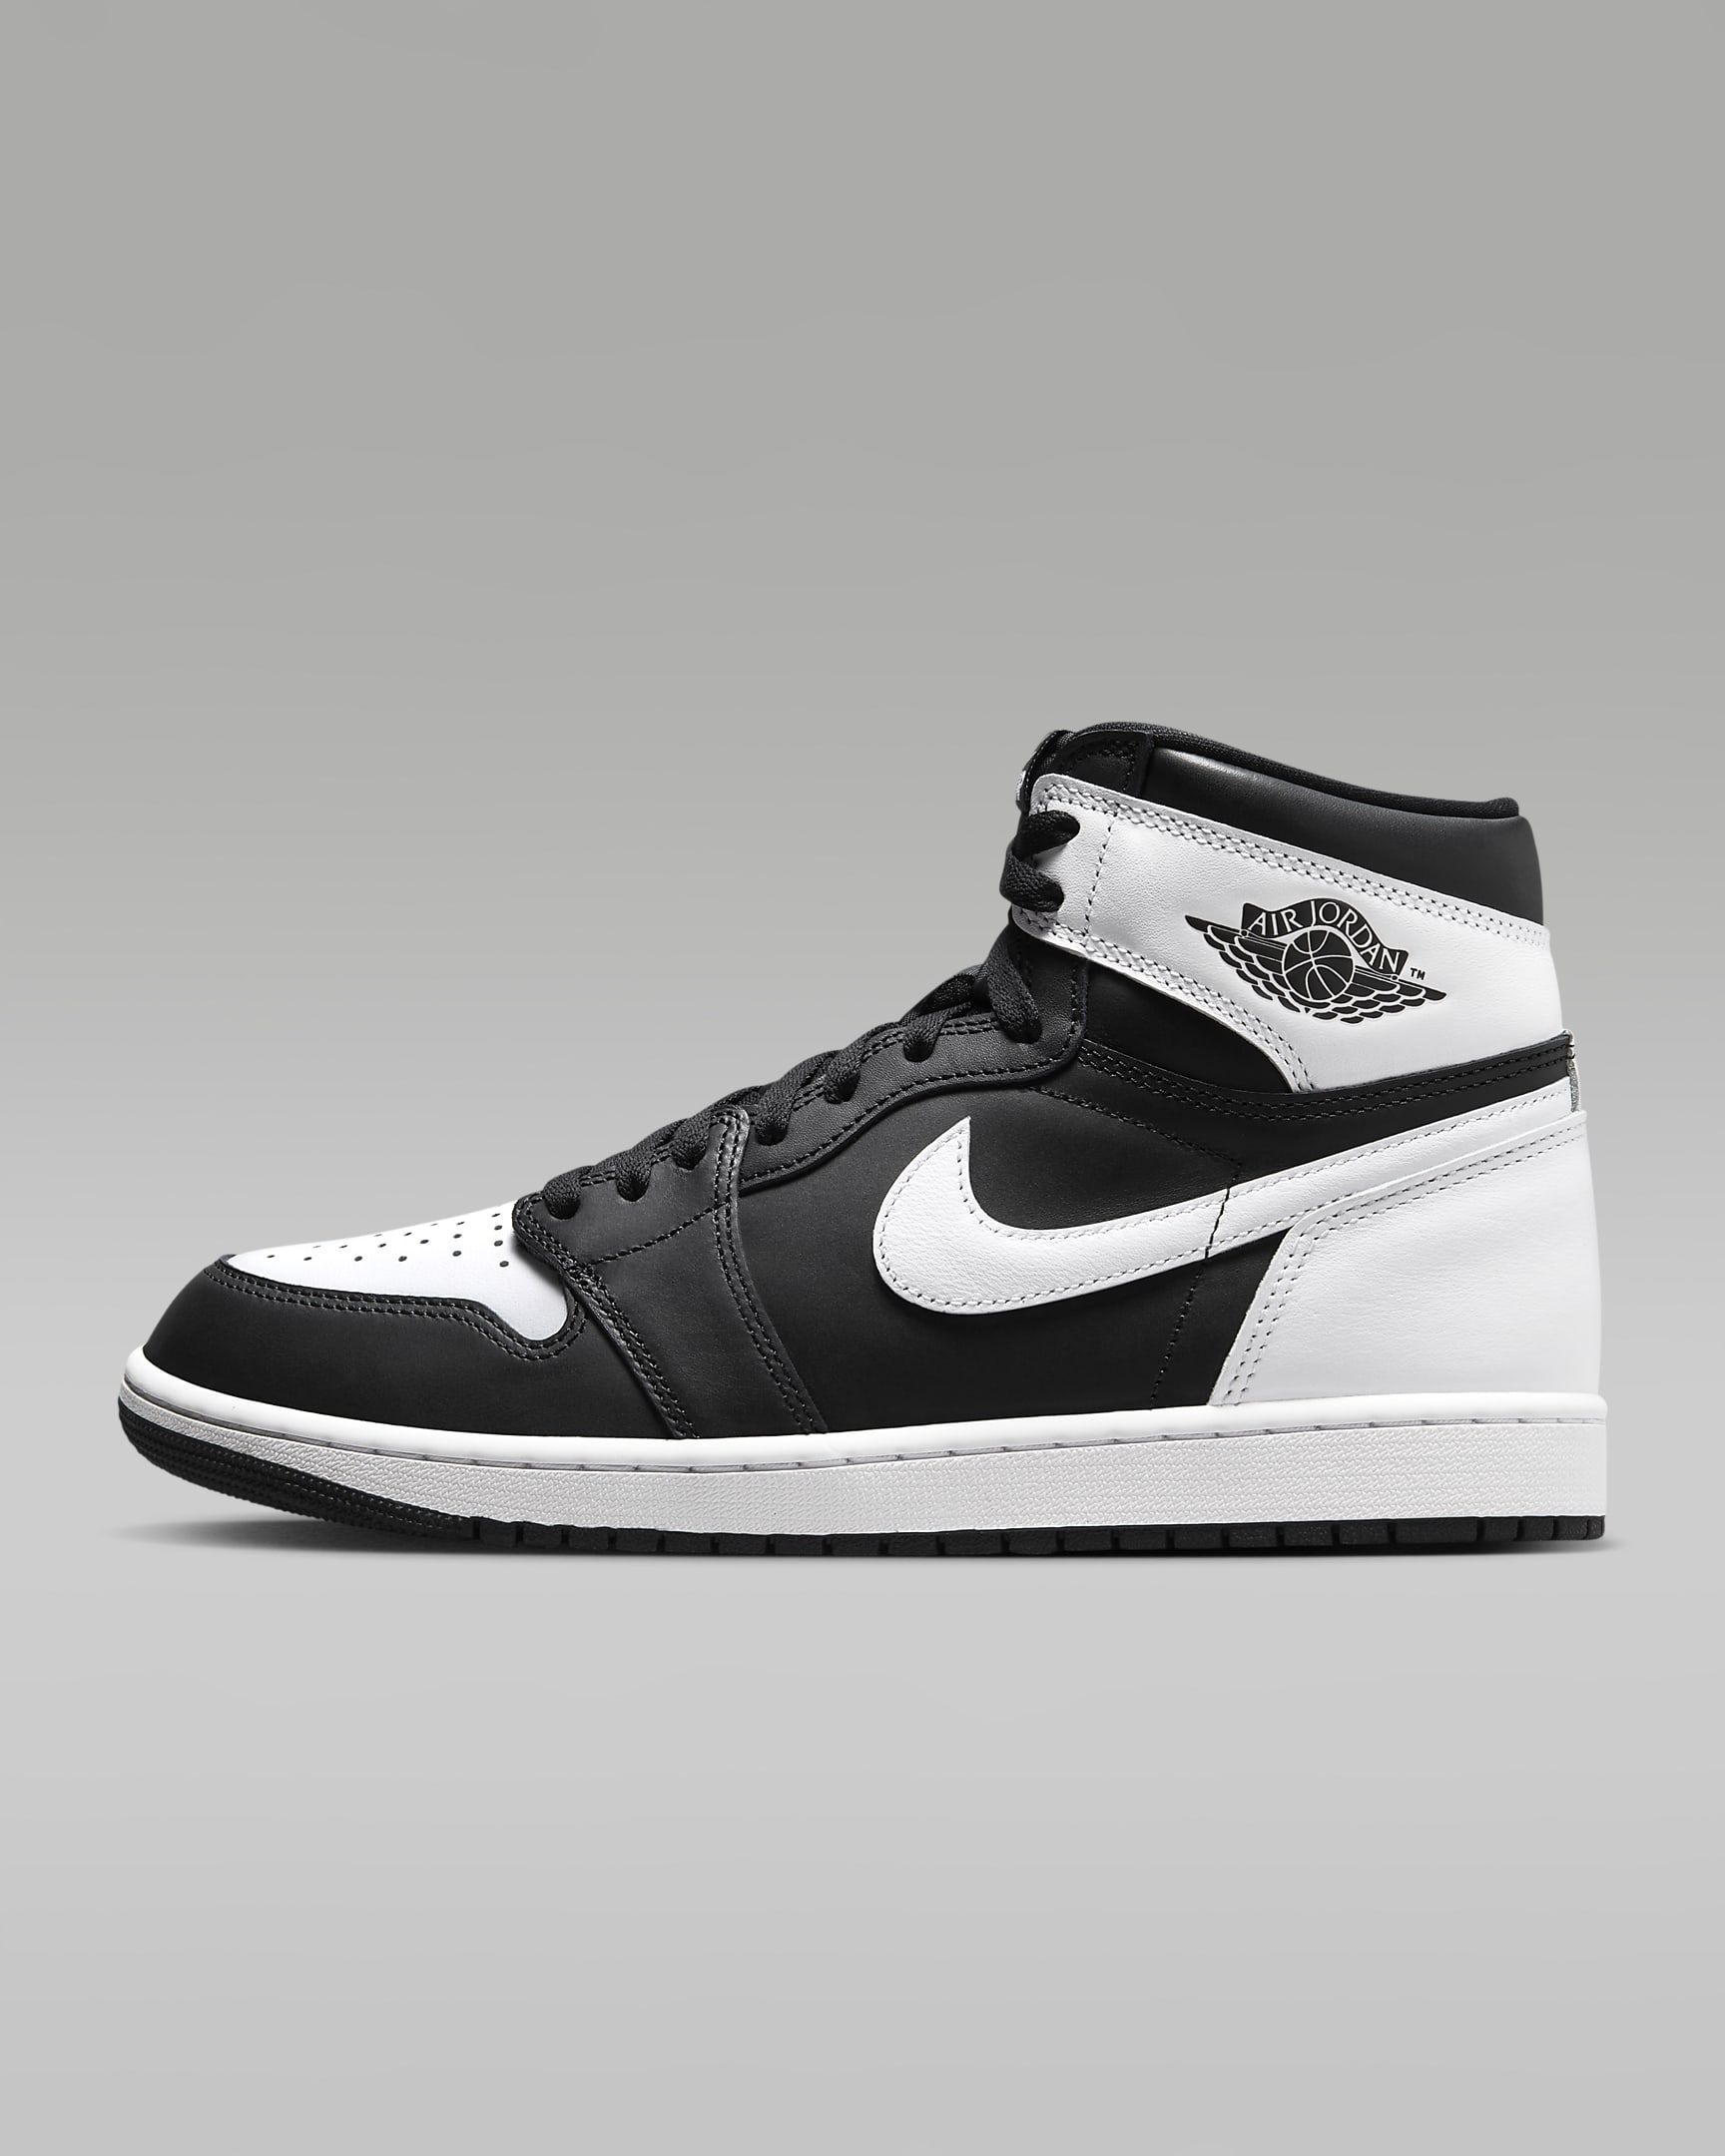 Air Jordan 1 Retro High OG "Black & White" Men's Shoes. Nike.com | Nike (US)